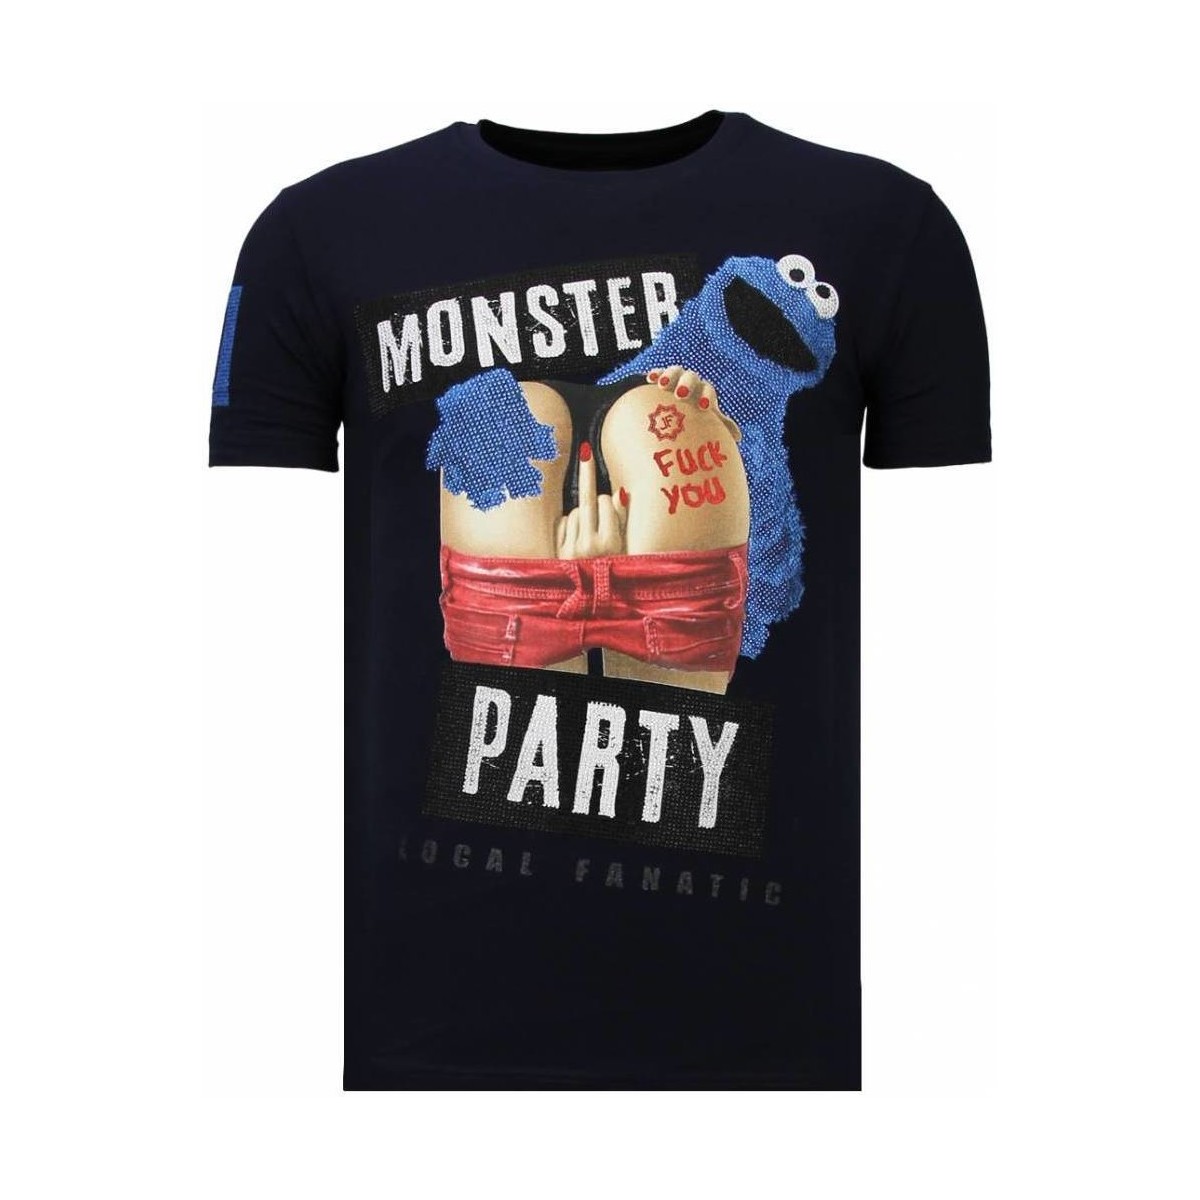 textil Hombre Camisetas manga corta Local Fanatic Monster Party Rhinestone Azul